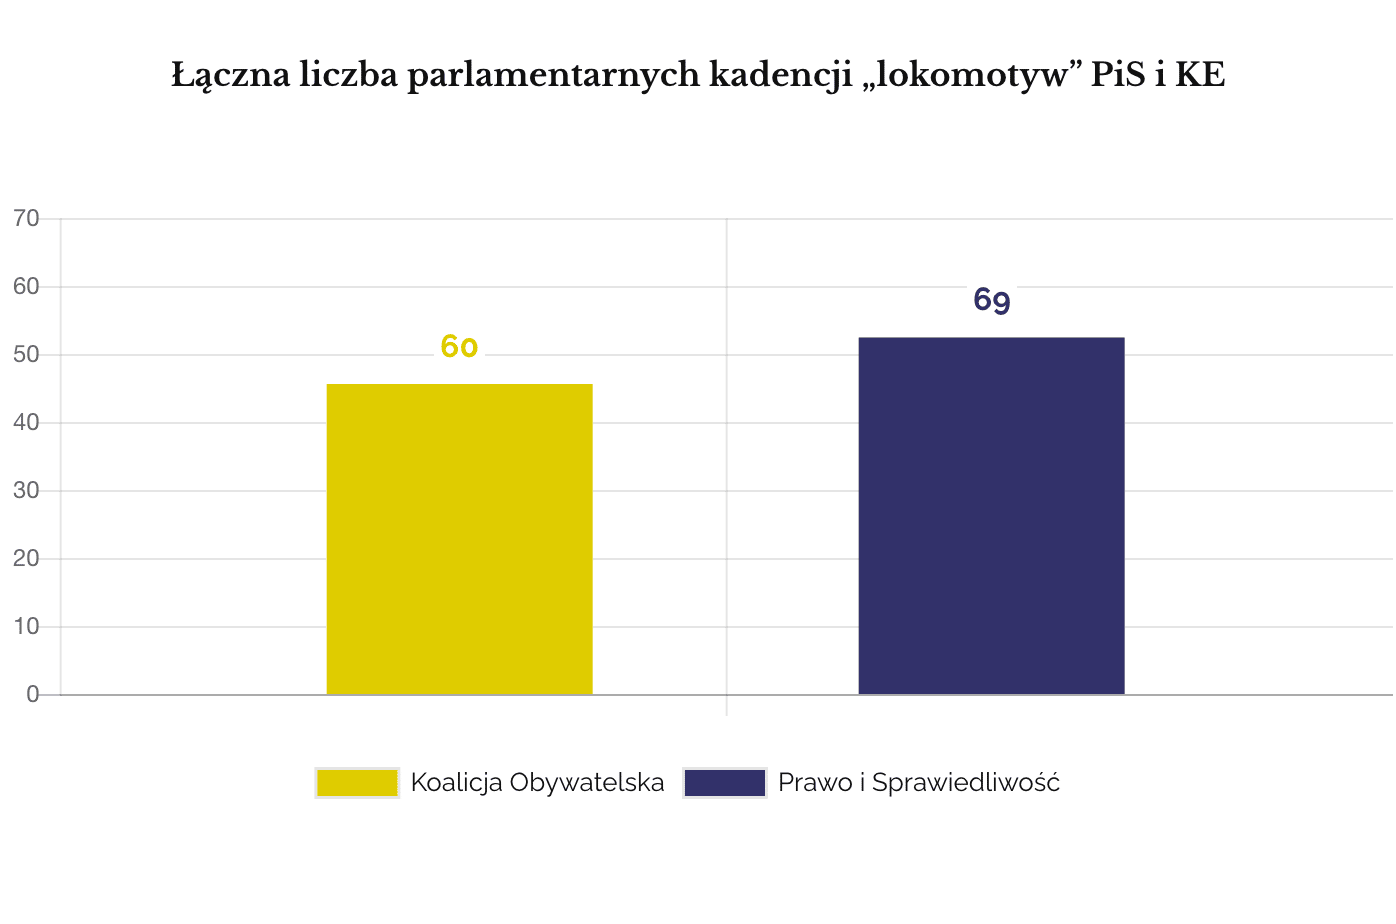 Liczba kadencji jedynek i dwójek PiS i KE do EP 2019 (sejm i senat)